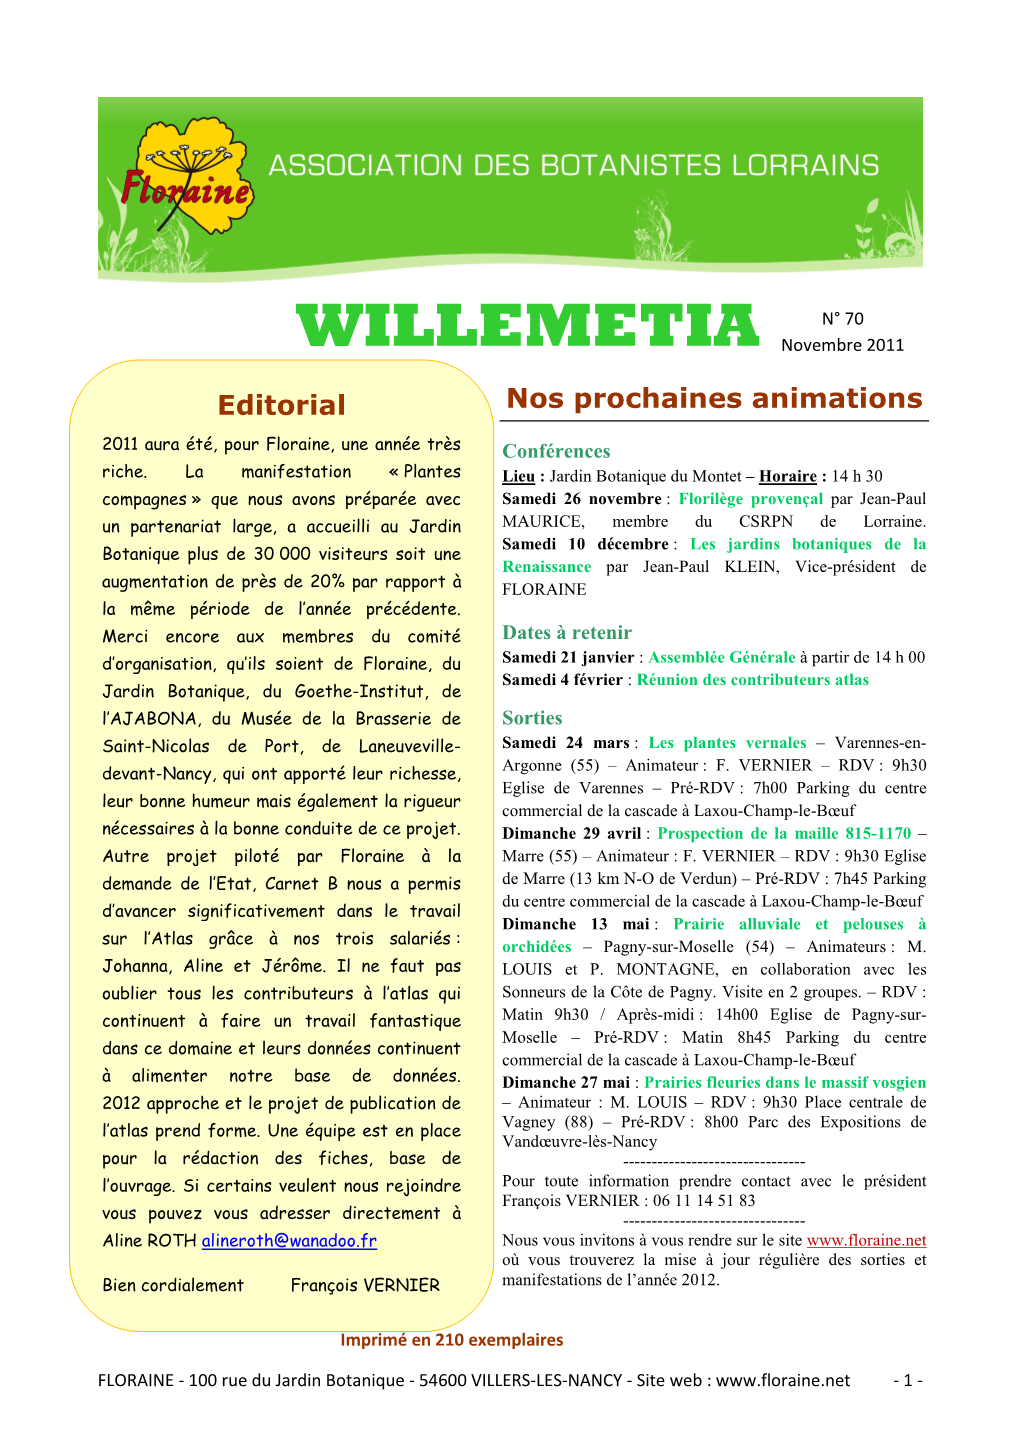 Willemetia N°70